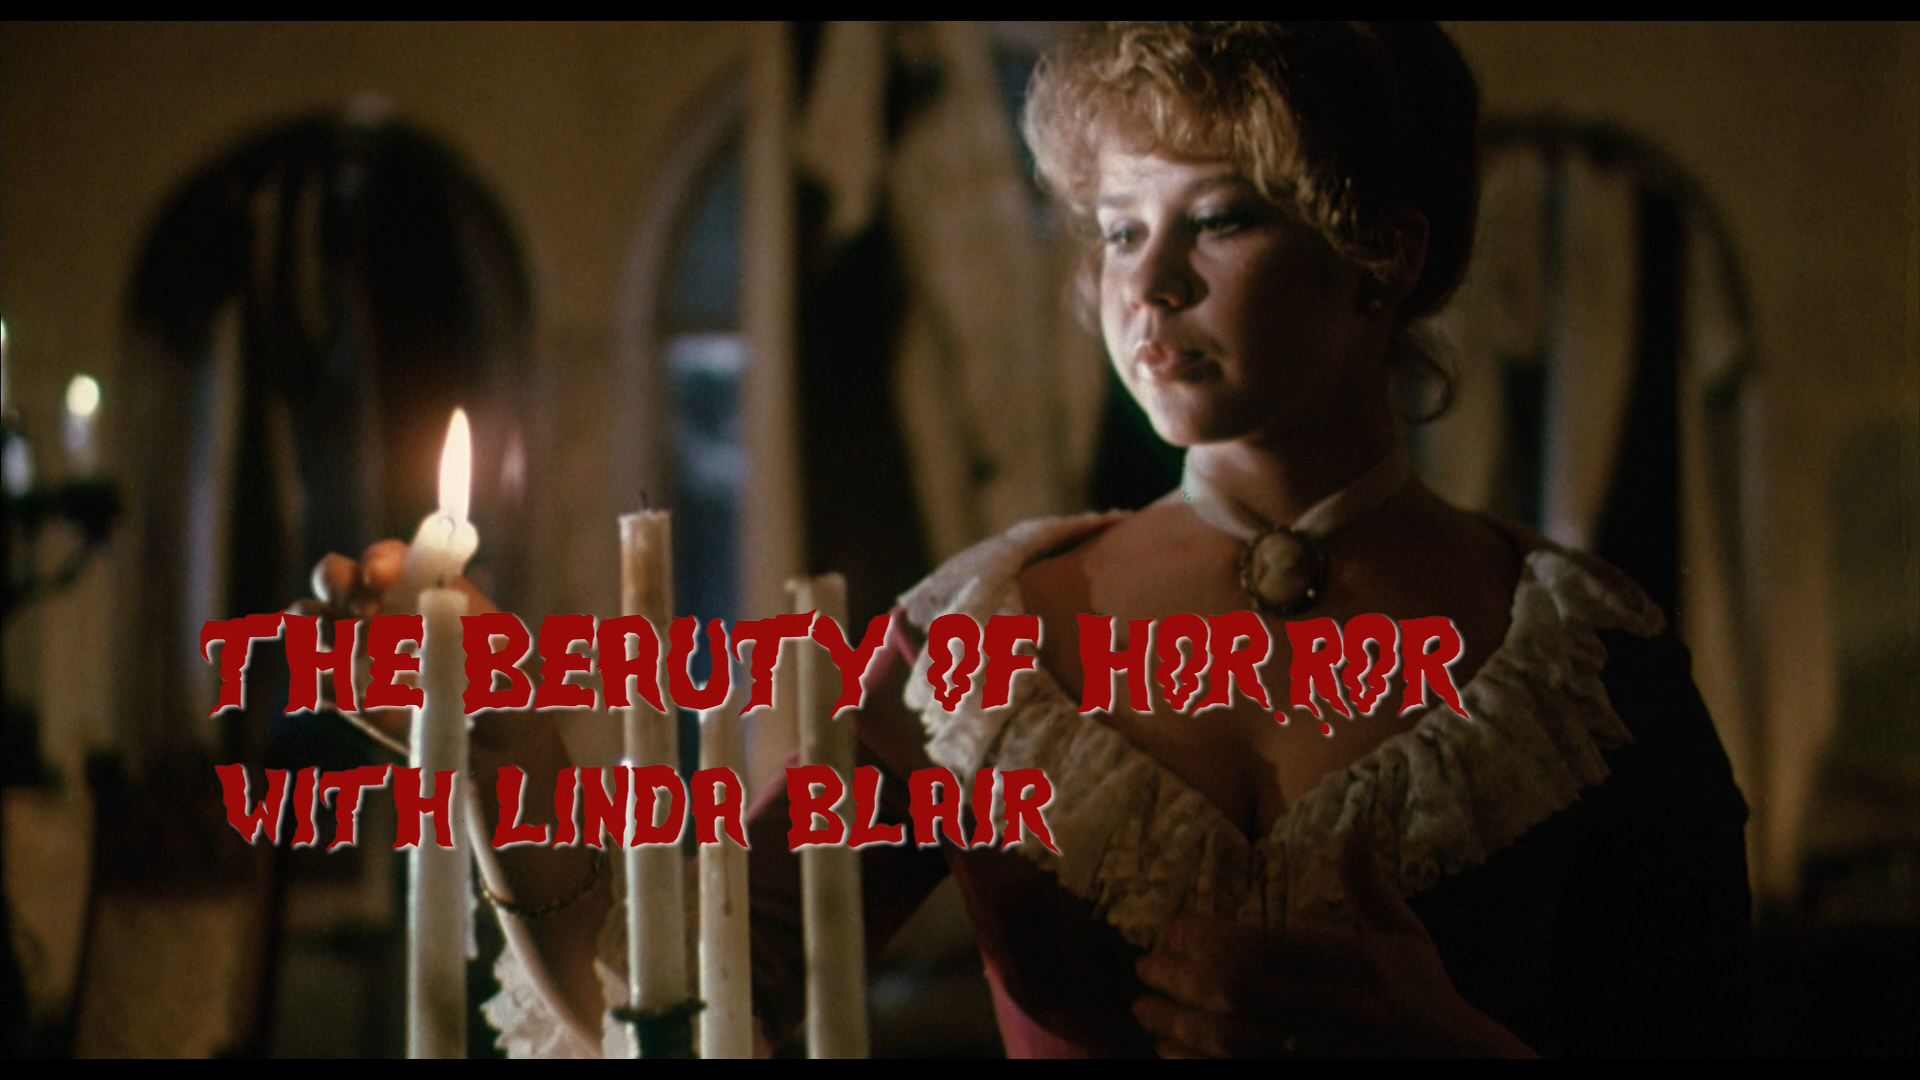 Linda Blair: The Beauty of Horror